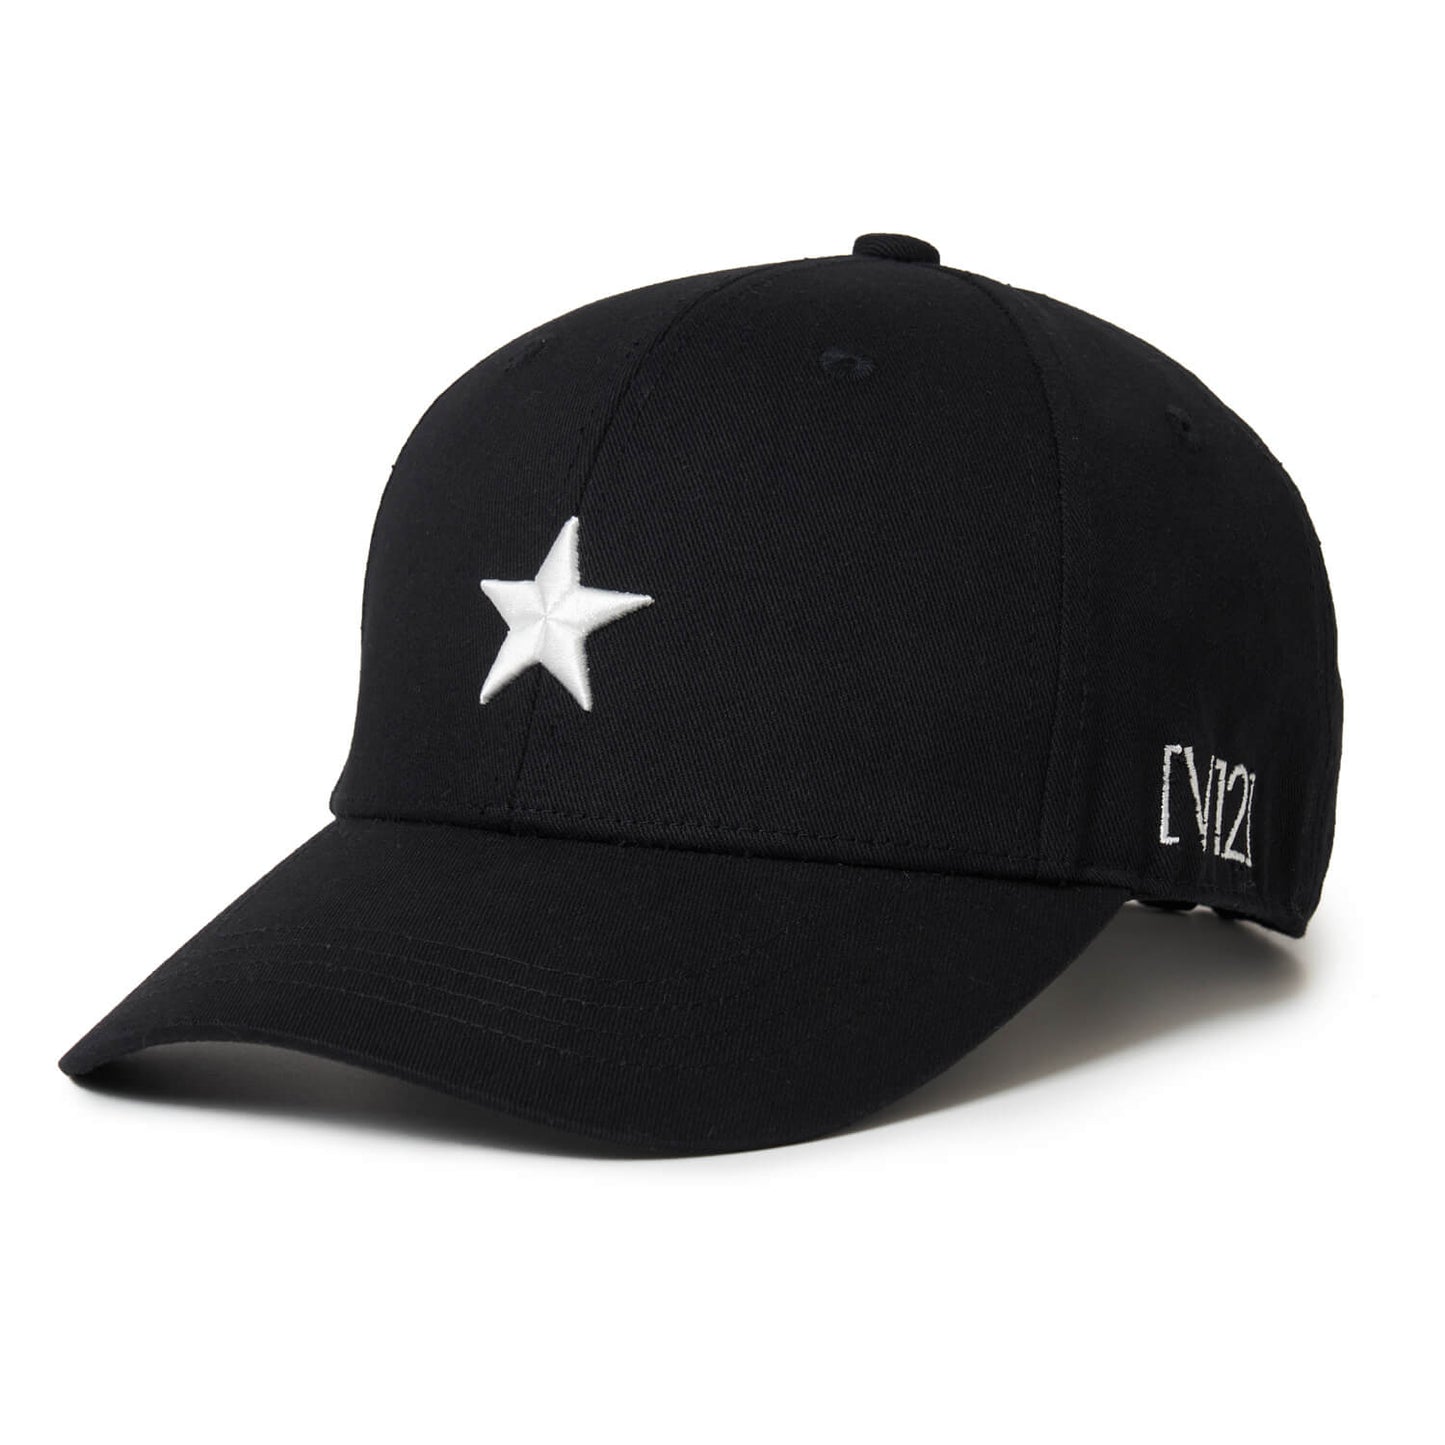 V12 ONE STAR CAP